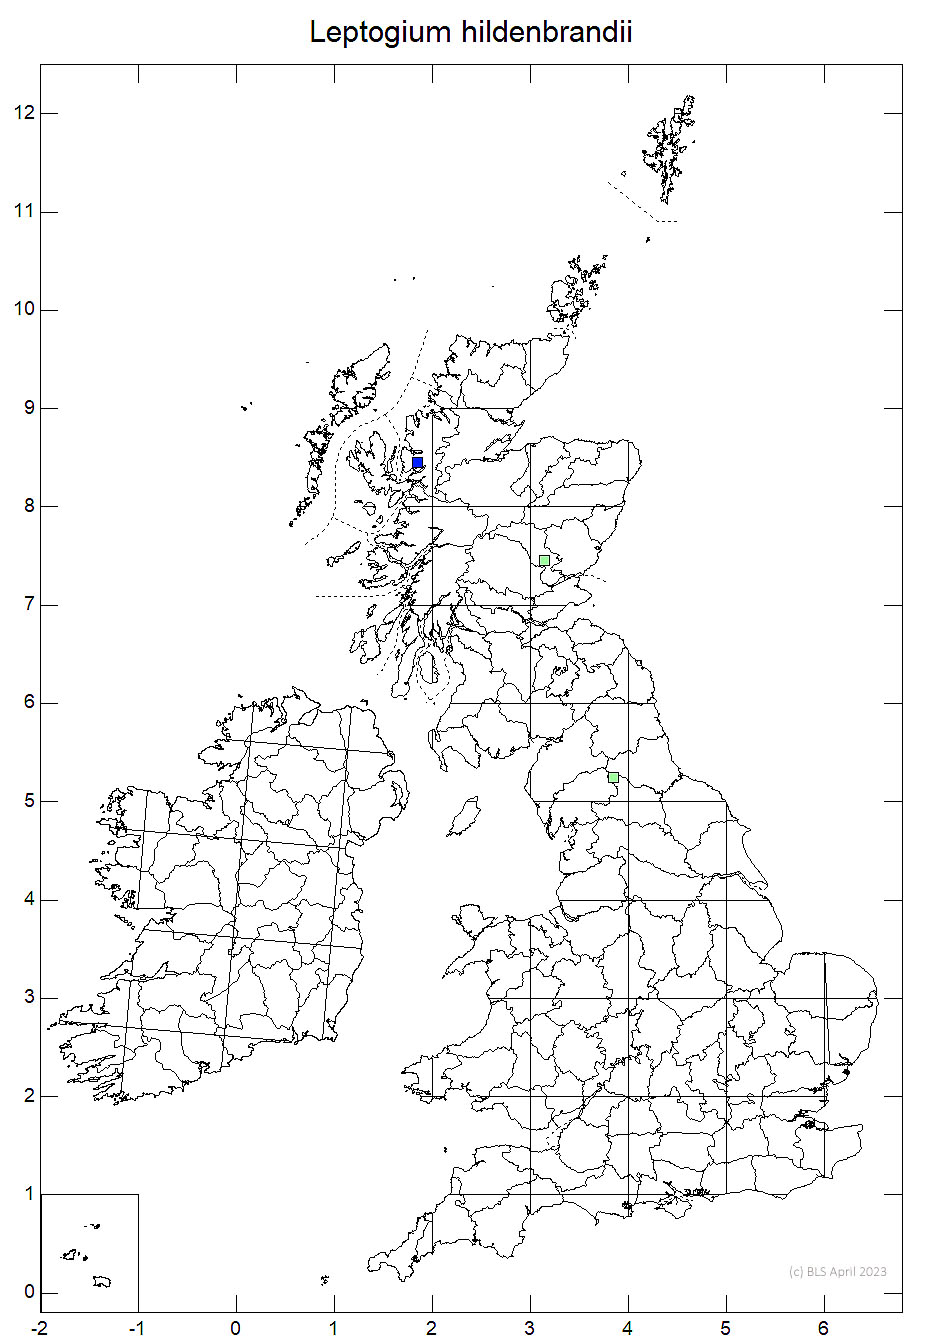 Leptogium hildenbrandii 10km sq distribution map